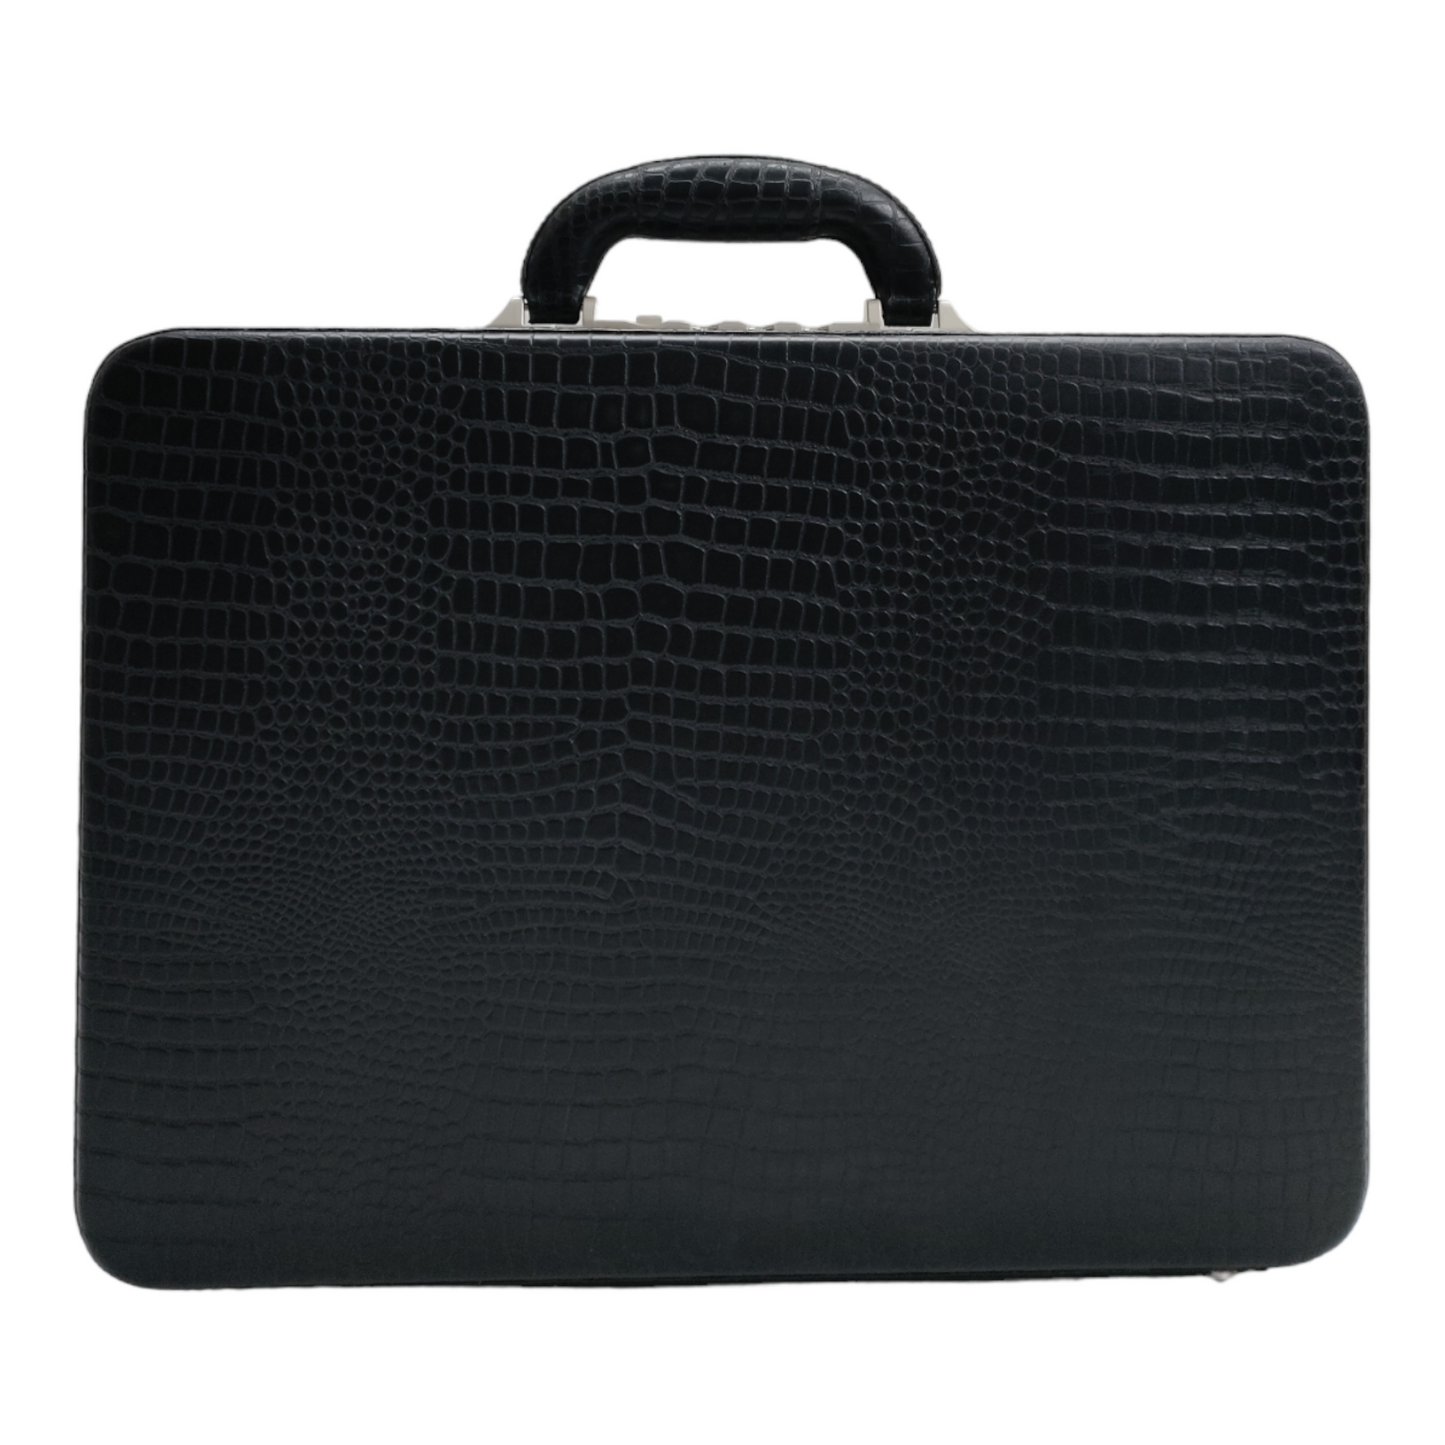 Antitheft Croco Leather Briefcase For Mens Genuine Leather Attache Briefcase Laptop Case Expandable Briefcase Large Doctors Briefcase